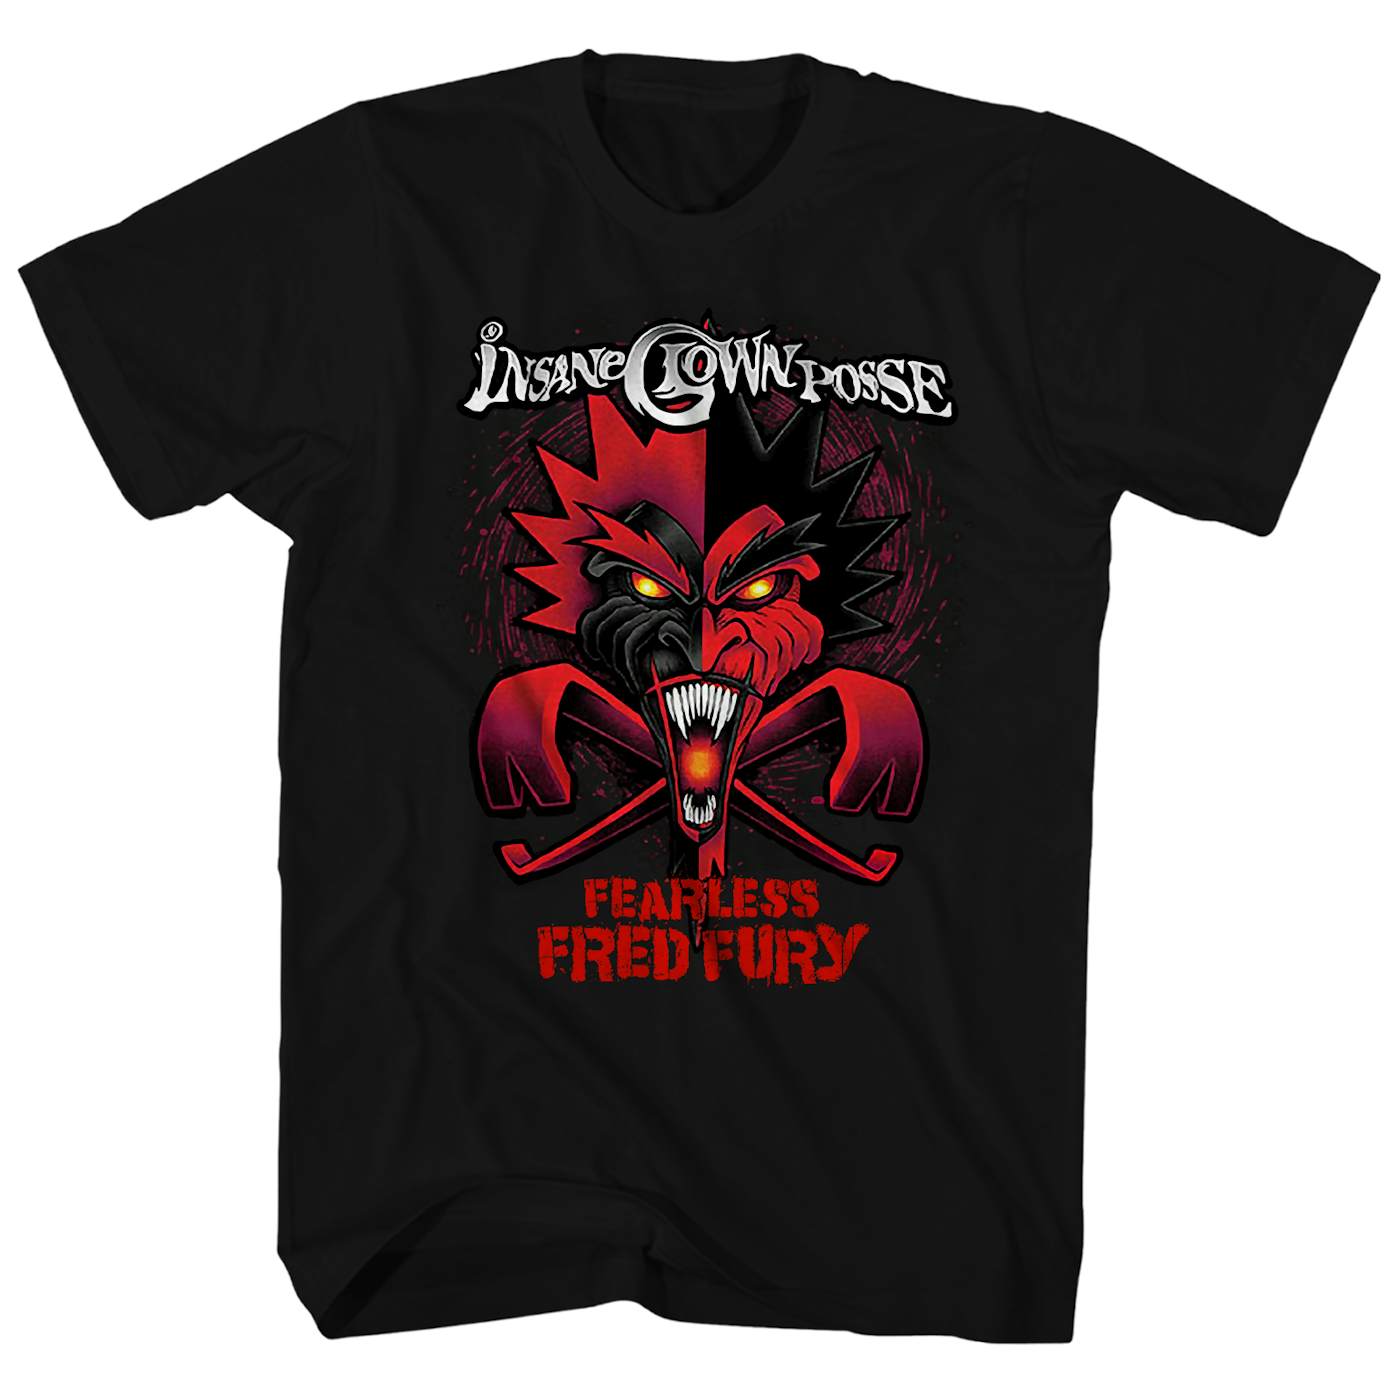 Insane Clown Posse T-Shirt | Fearless Fred Fury Album Art Insane Clown Posse Shirt